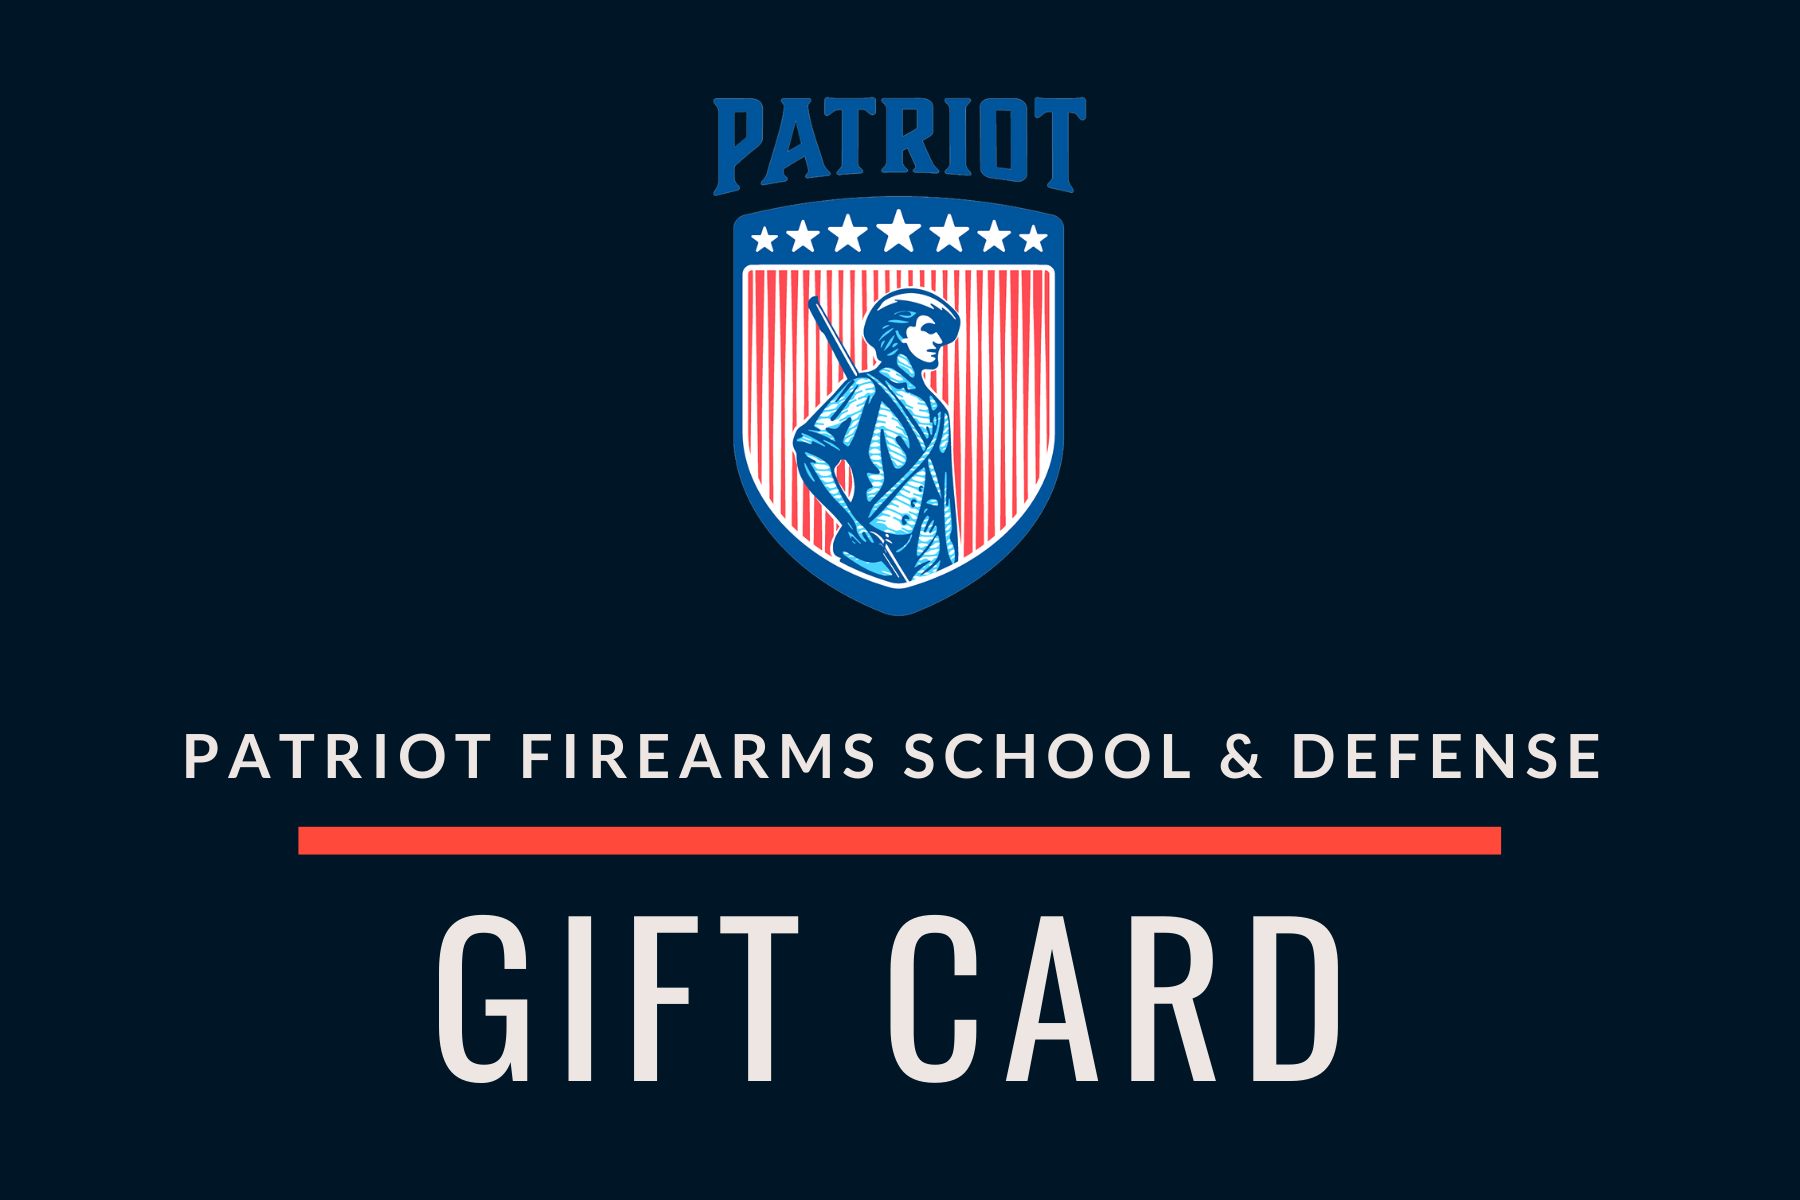 Patriot Gift Card - Patriot Firearms School & Defense LLC